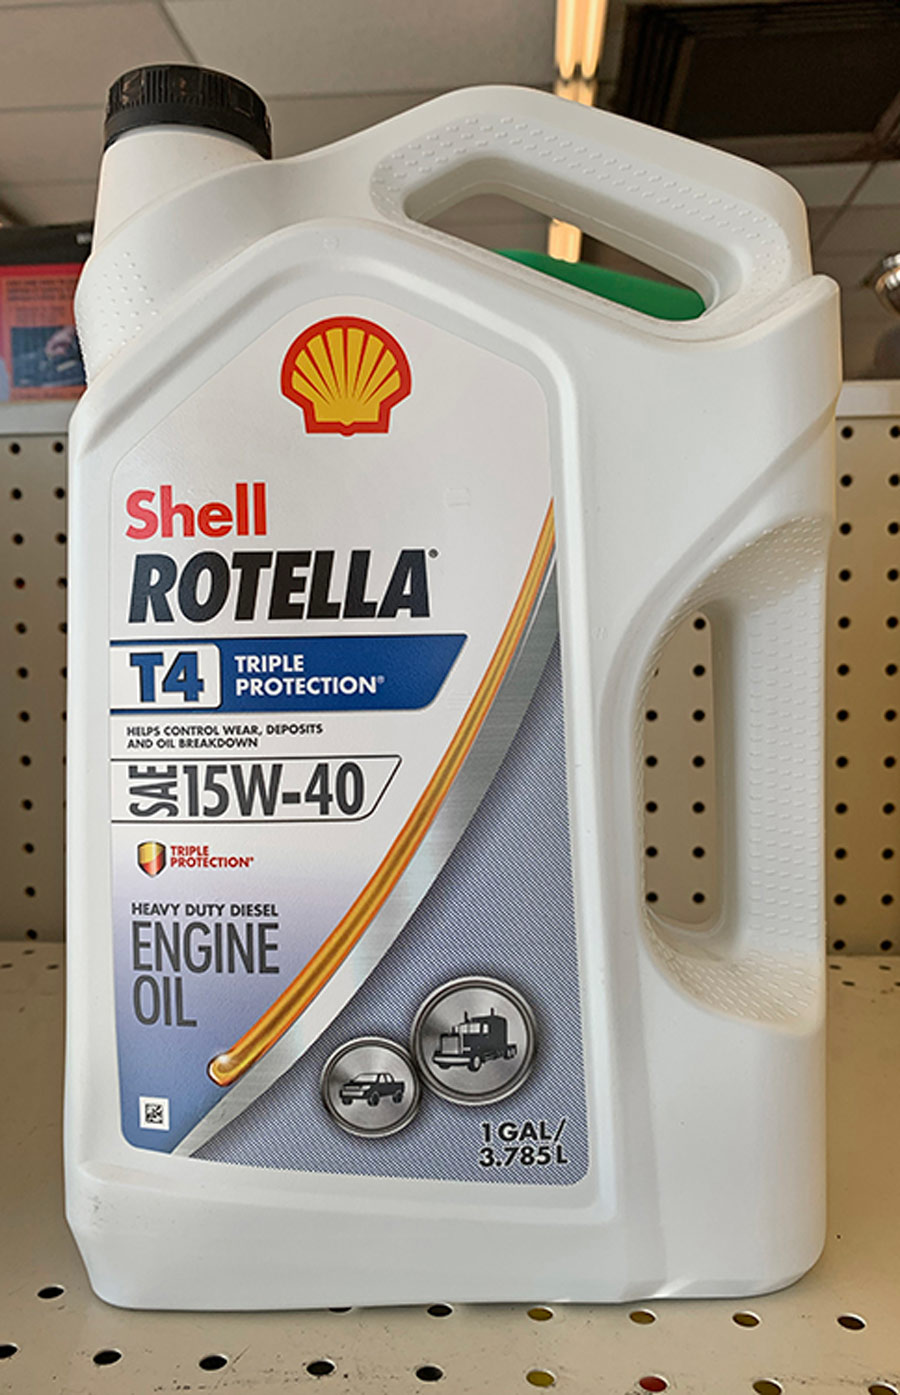 Shell’s popular Rotella brand on the shelf